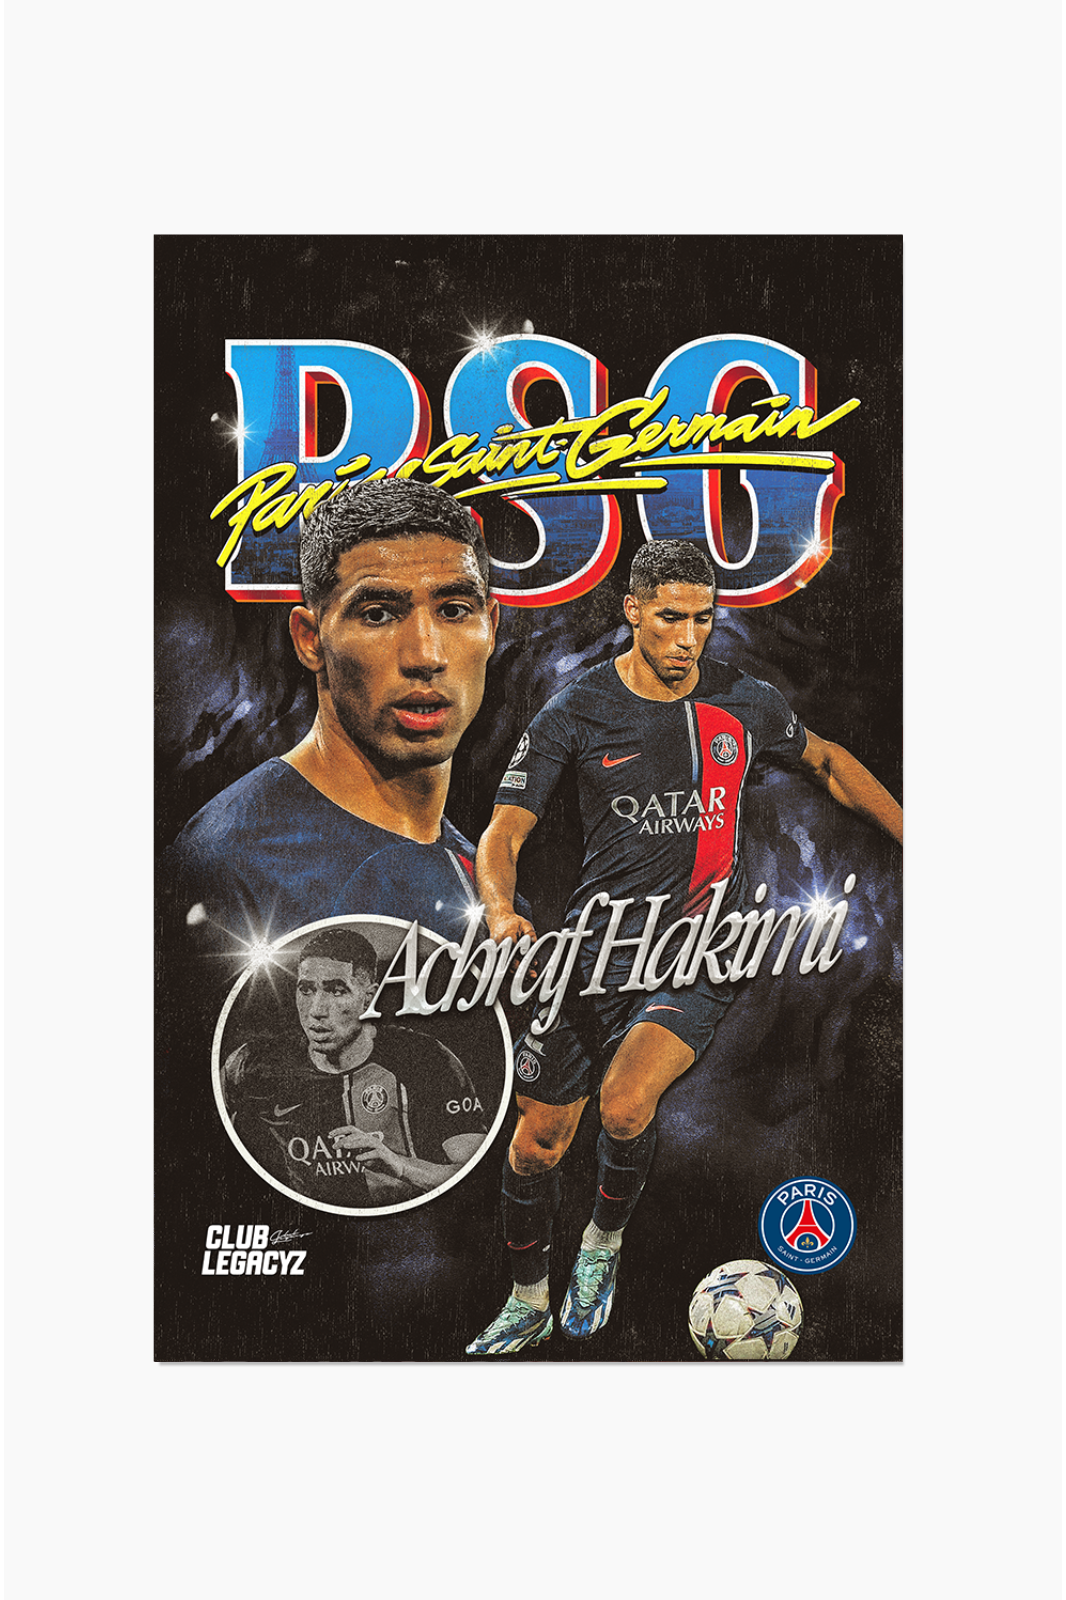 Paris Saint-Germain - Poster Bootleg Achraf Hakimi Bootleg 100 exemplaires